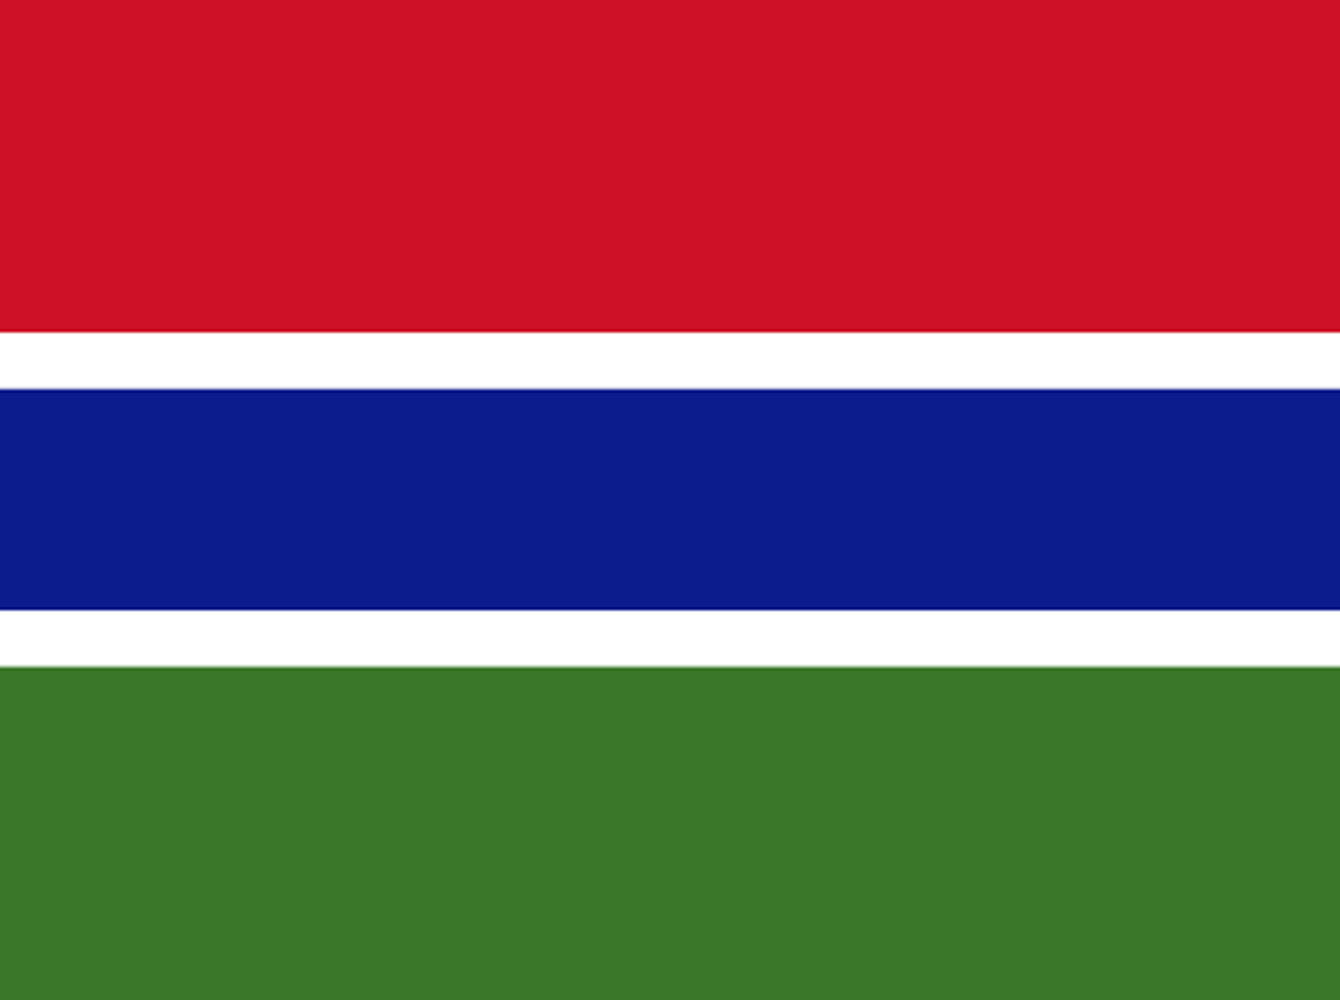 TESSA - The Gambia